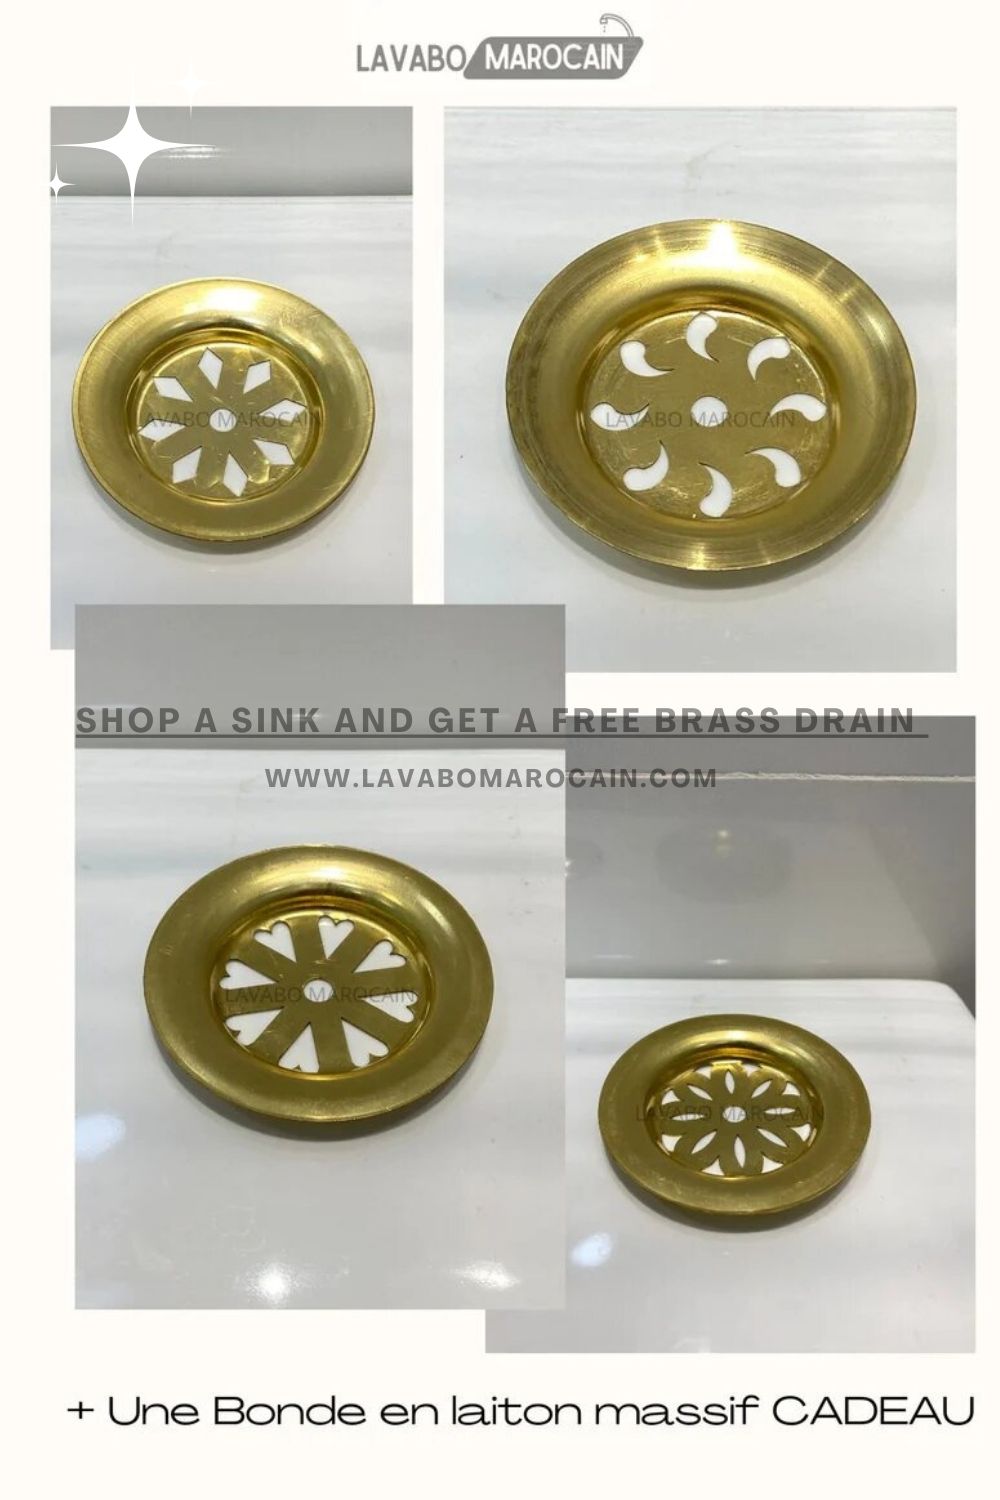 Moroccan sink 14k carats gold rim - Hand painted ceramic sink - Mid century modern bathroom sink #20Q